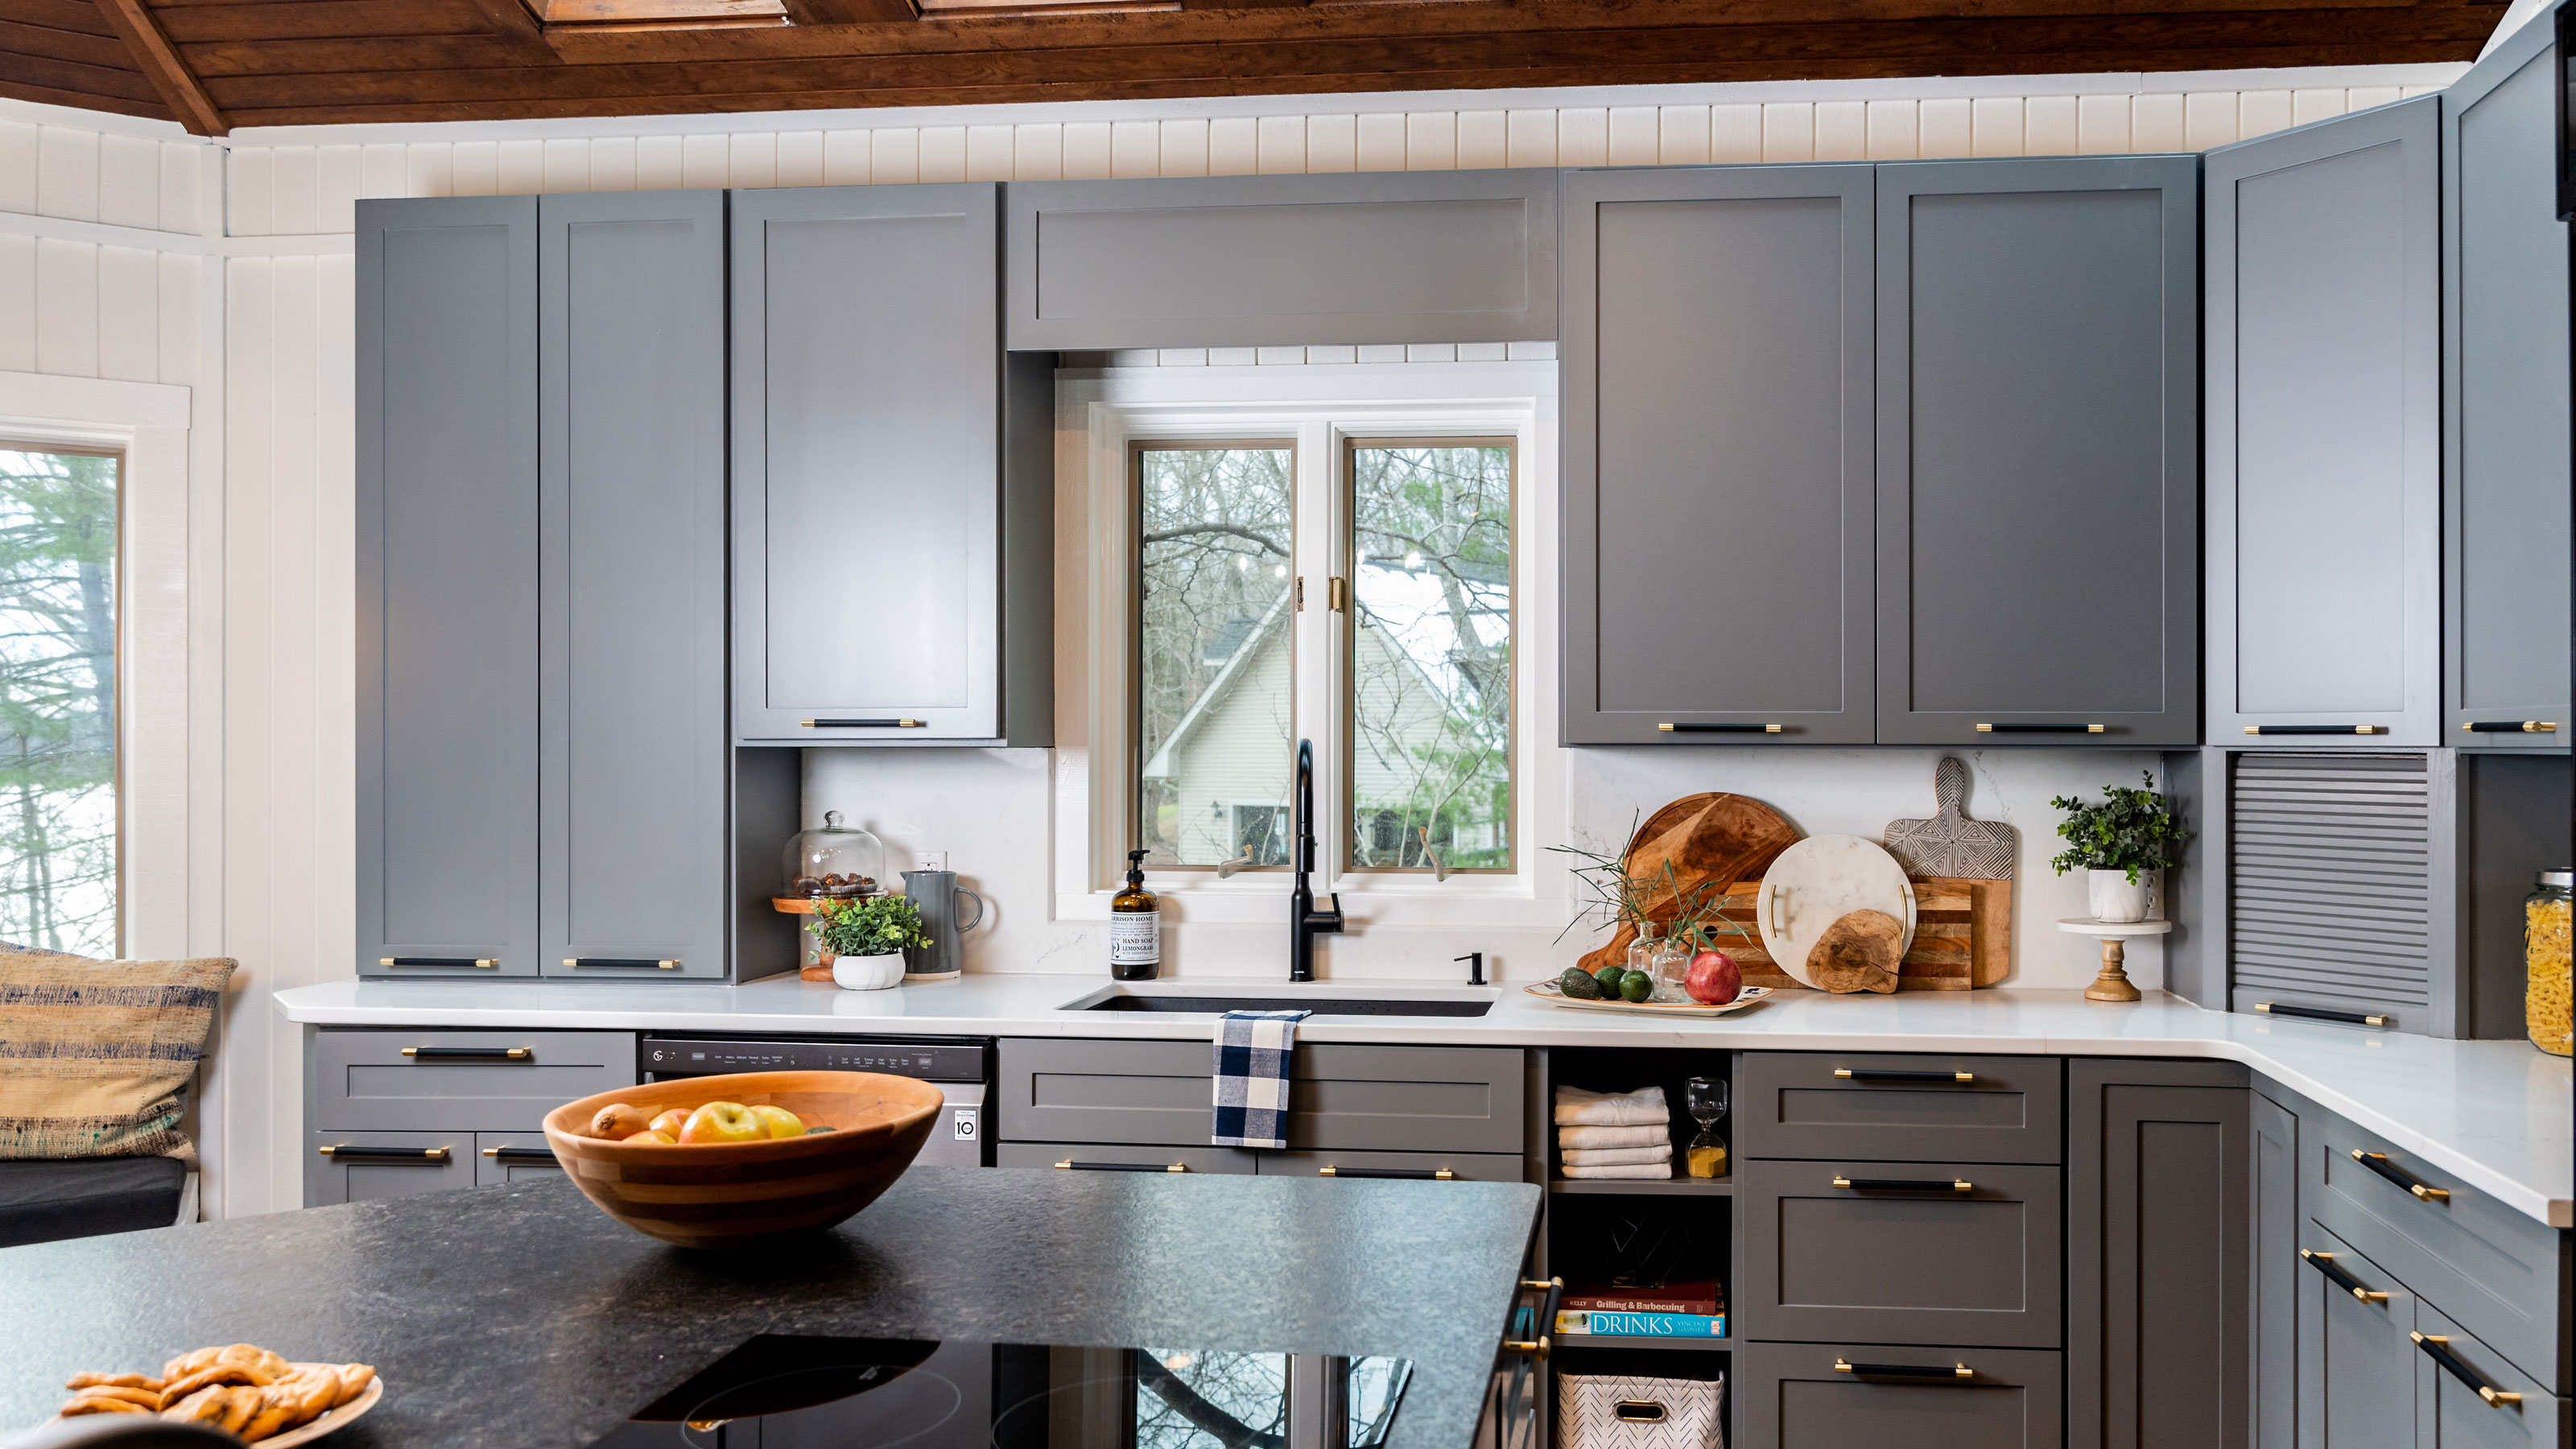 Kortney Wilson shares stunning blue kitchen makeover   Real Homes